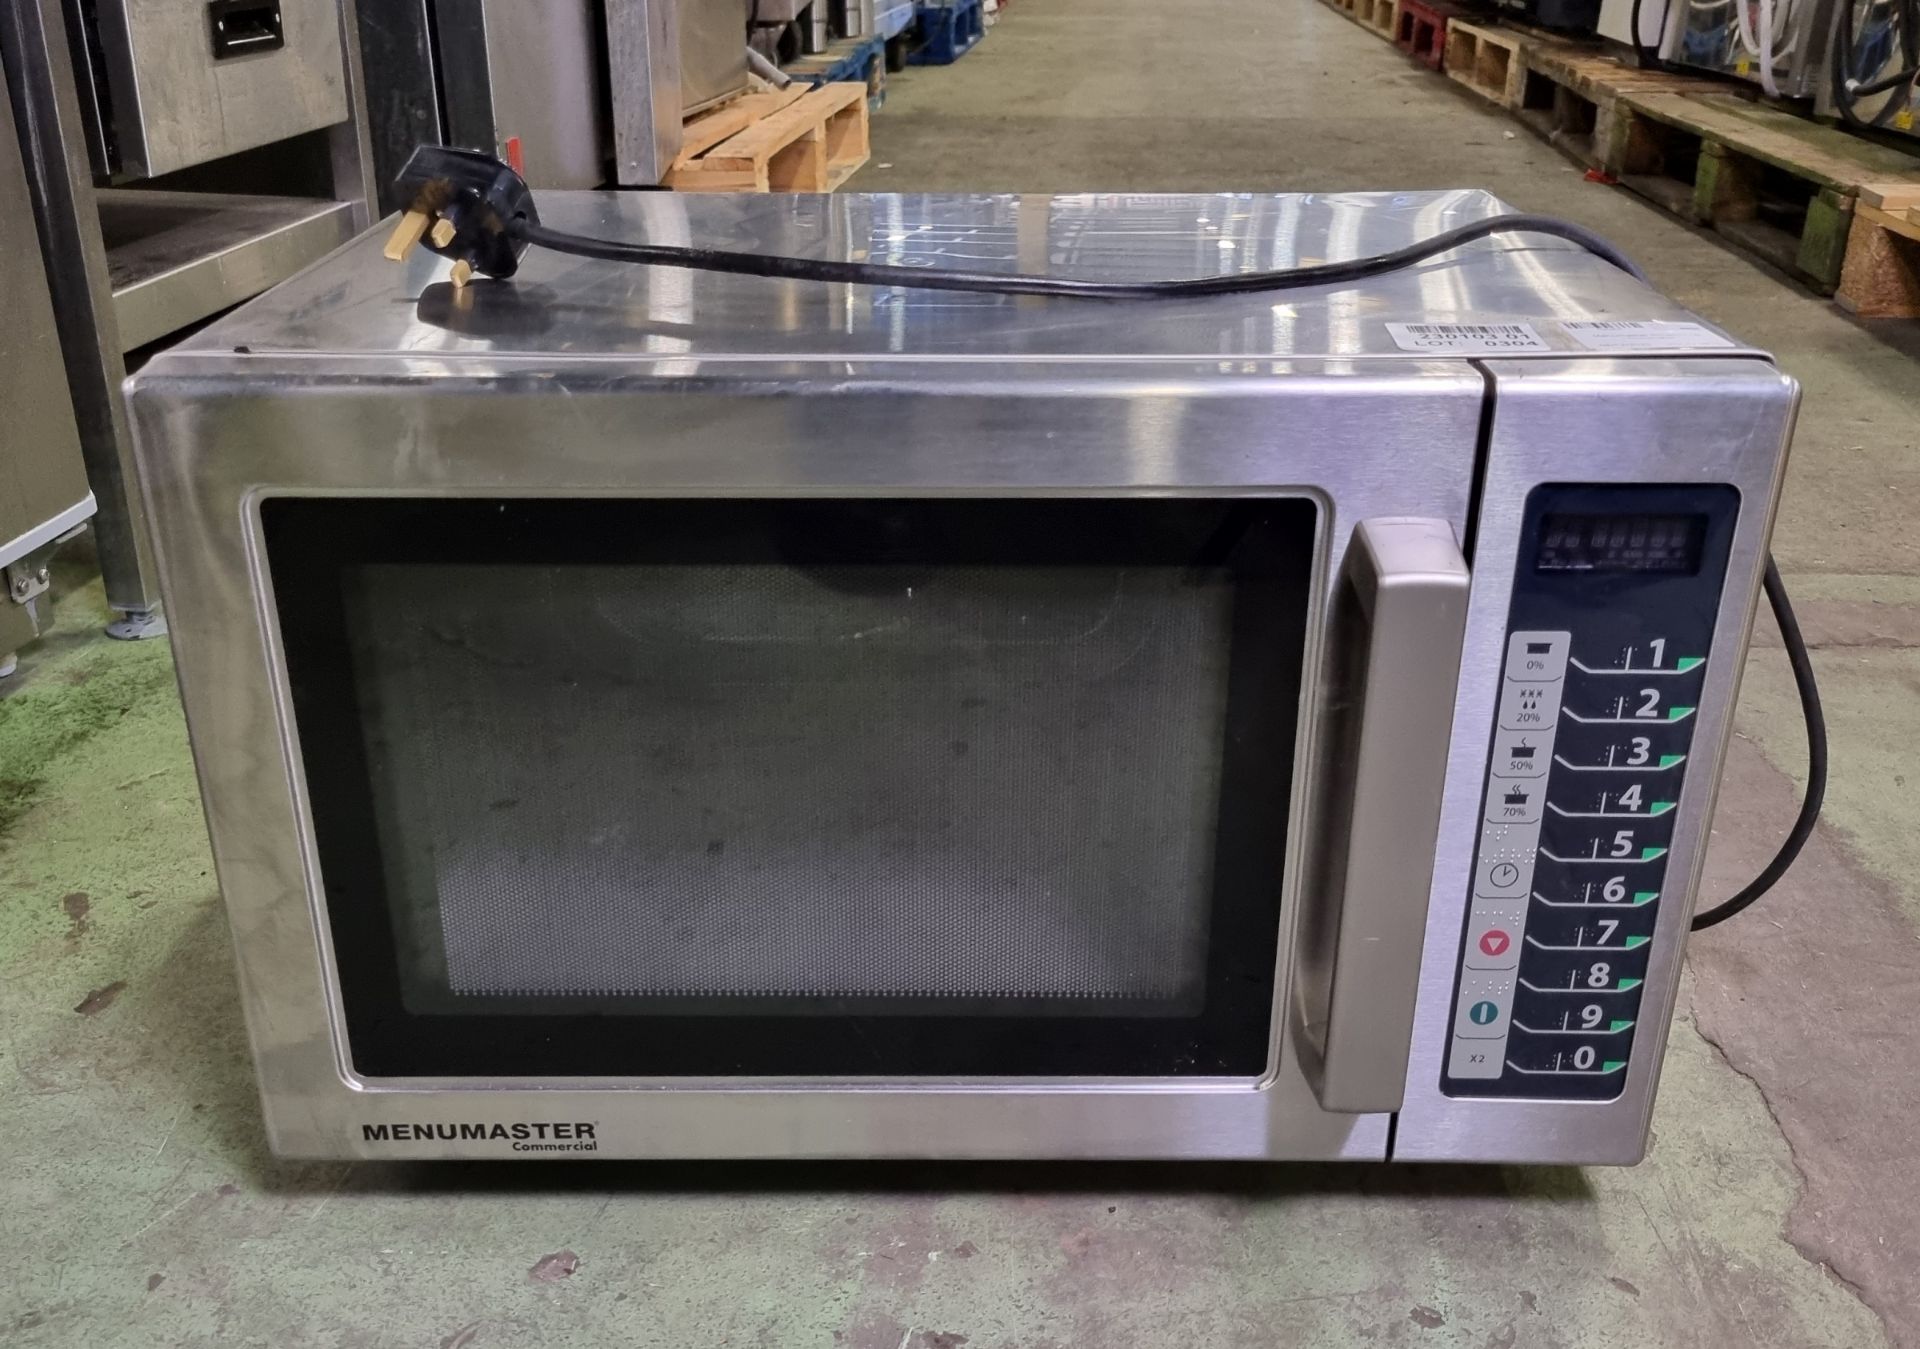 Menumaster RCS511TS microwave